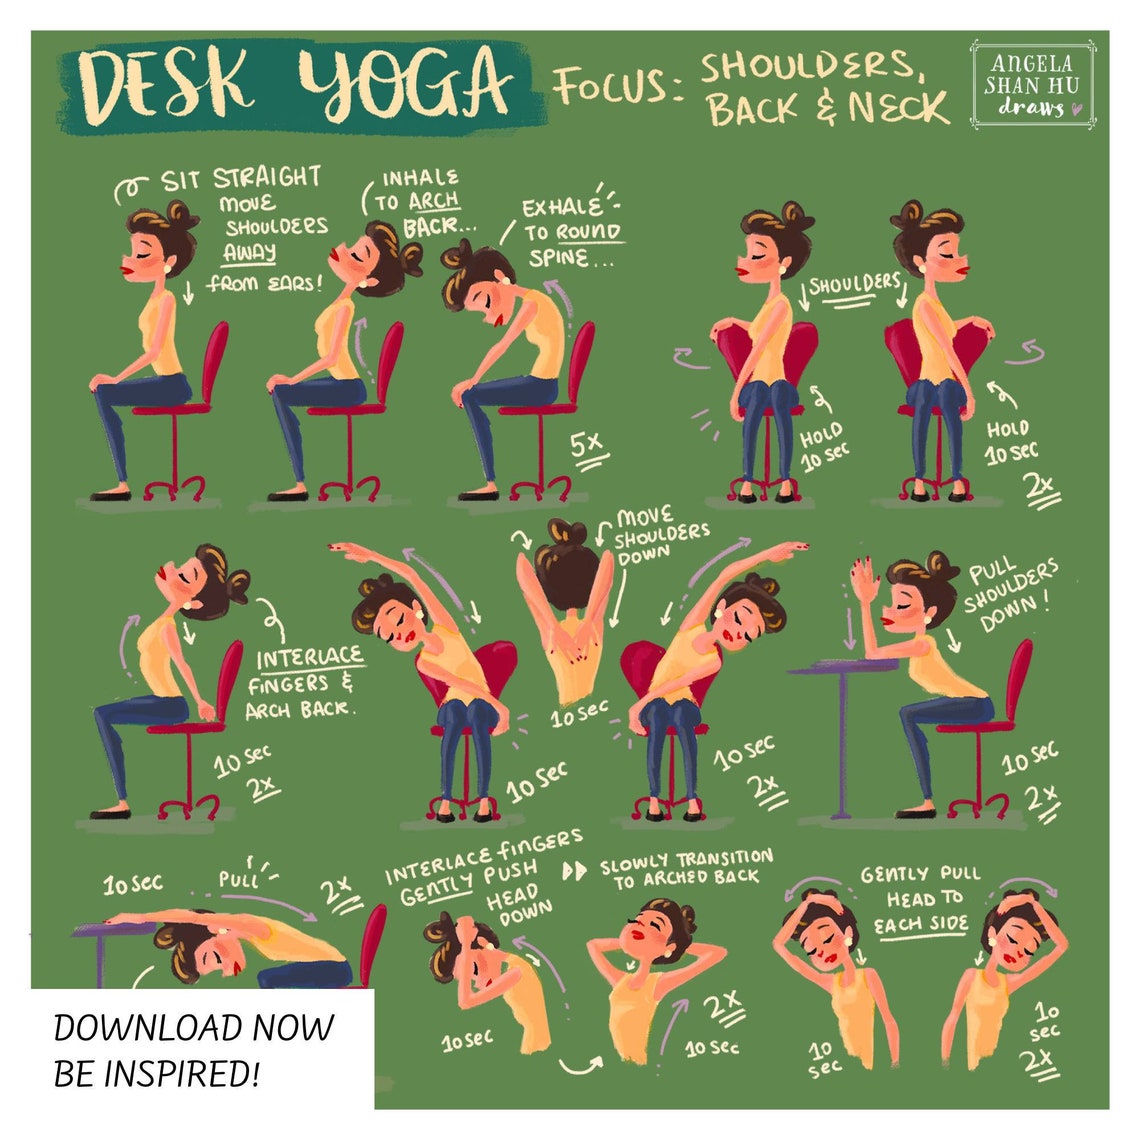 20 minute Yoga for Flexibility (Level 1) Full Body Yoga Stretch - YouTube